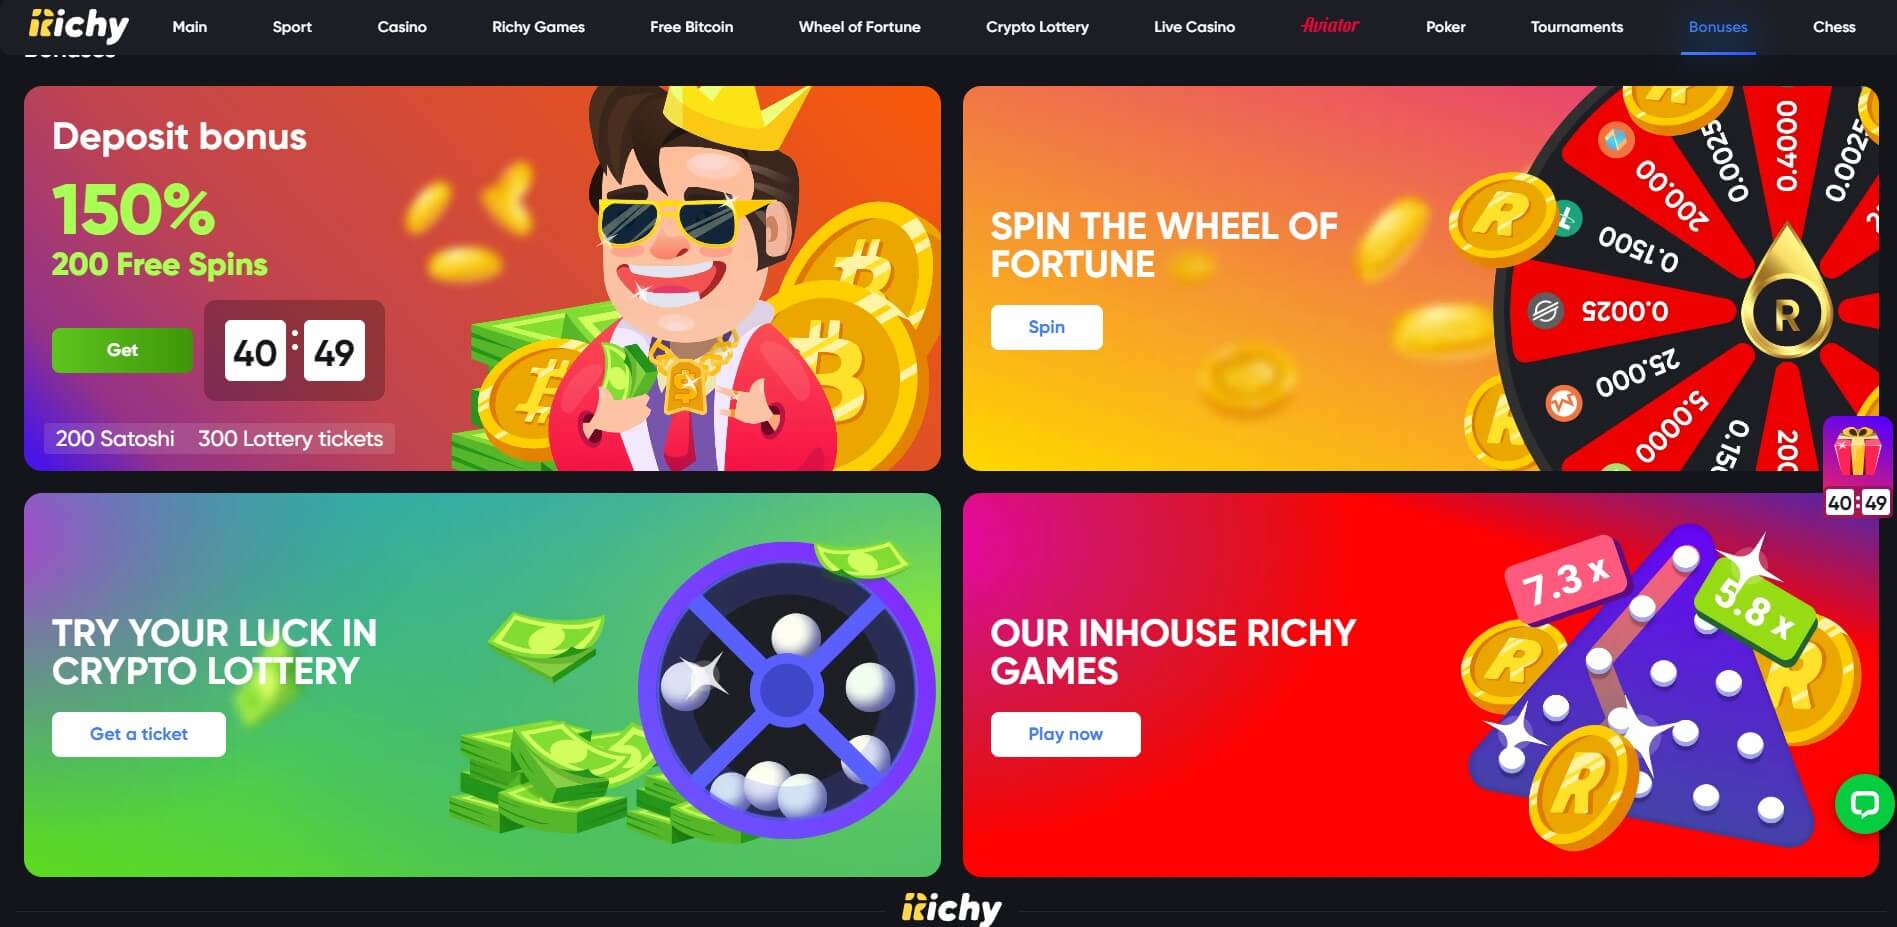 Richy Casino Promotions